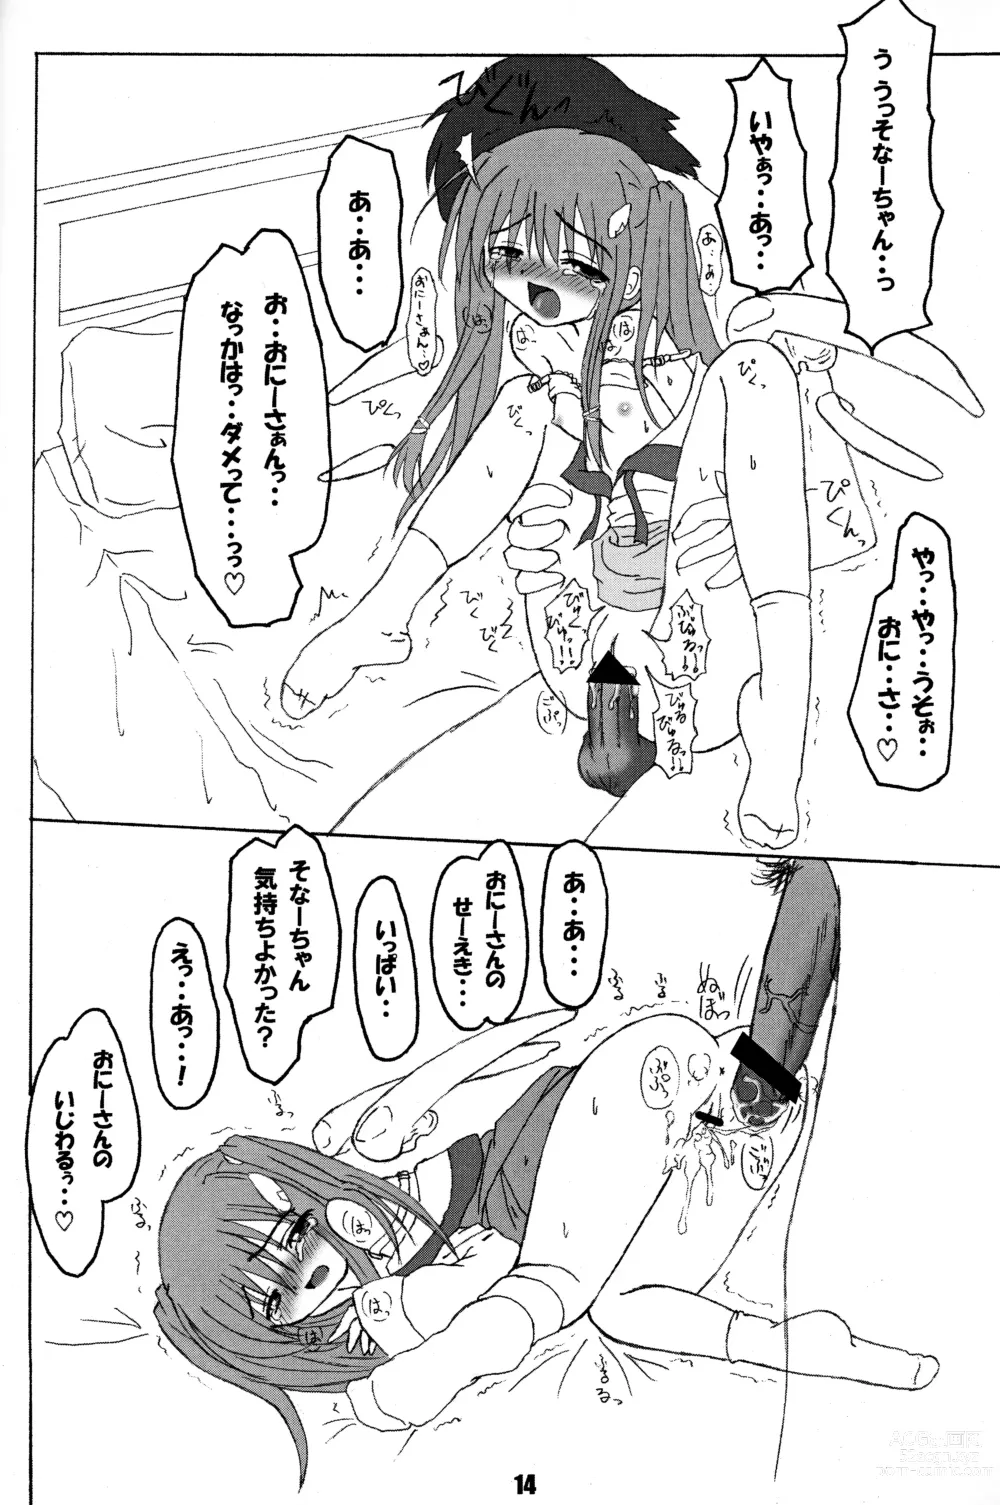 Page 13 of doujinshi Rollin 9